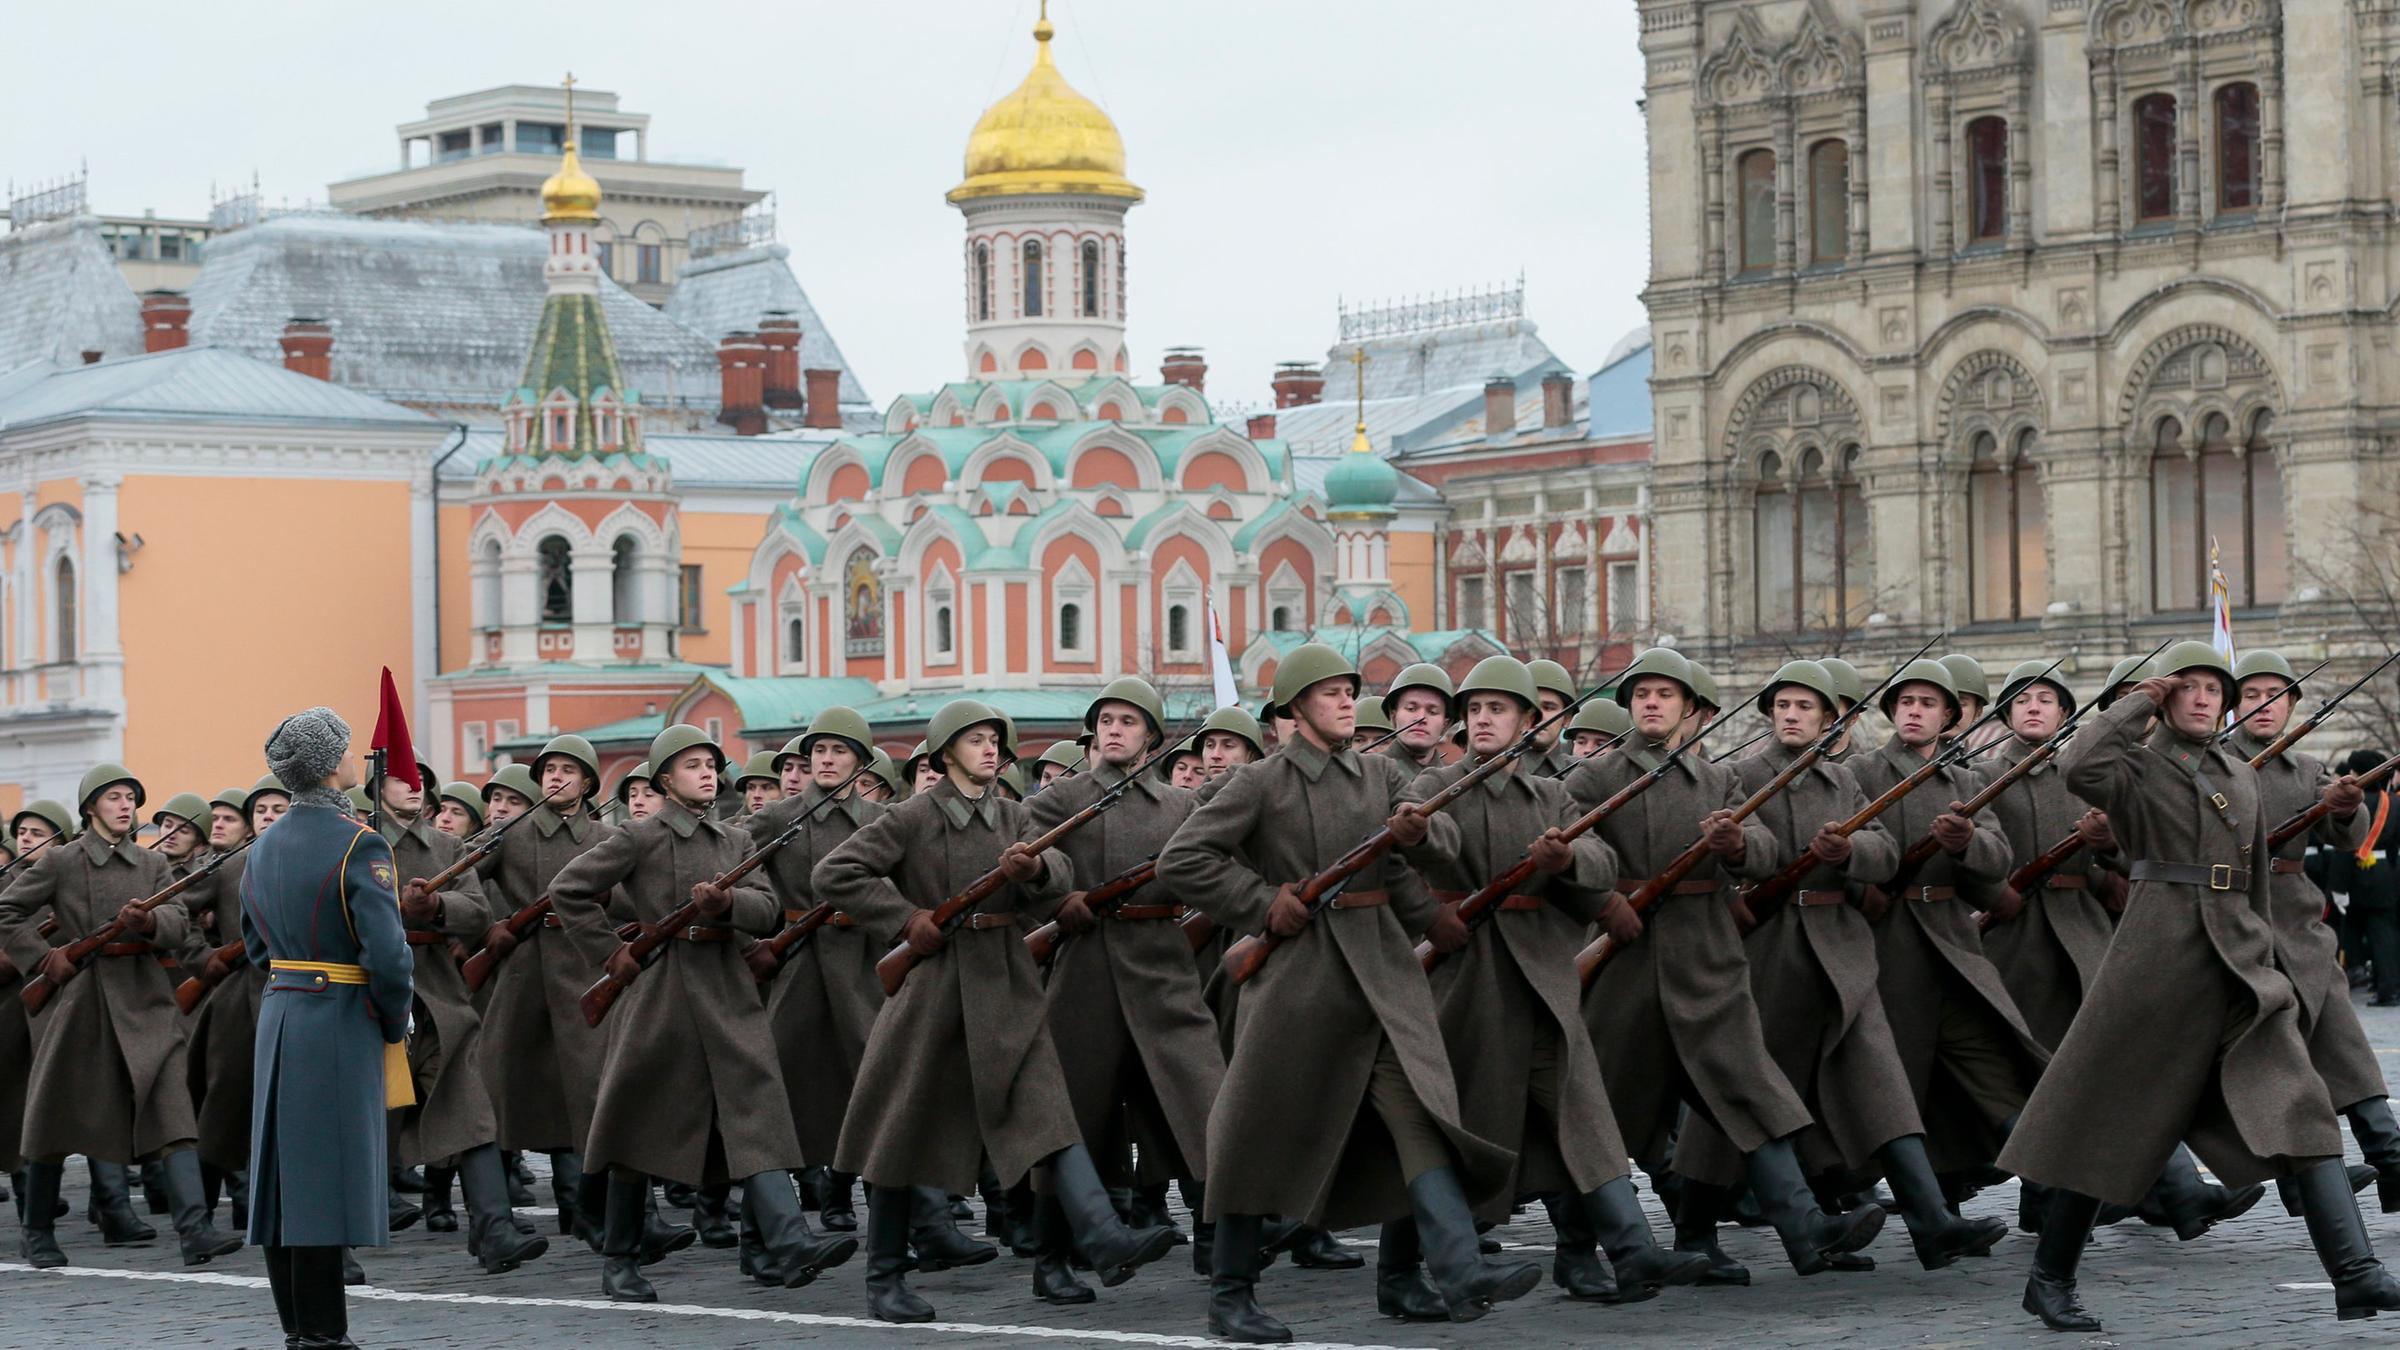 Где прошел парад в 1941 году. Парад 7 ноября 1941. Парад 1941 года на красной площади. Парад на красной площади 7 ноября 1941. Фото парада 7 ноября 1941 года на красной площади в Москве.